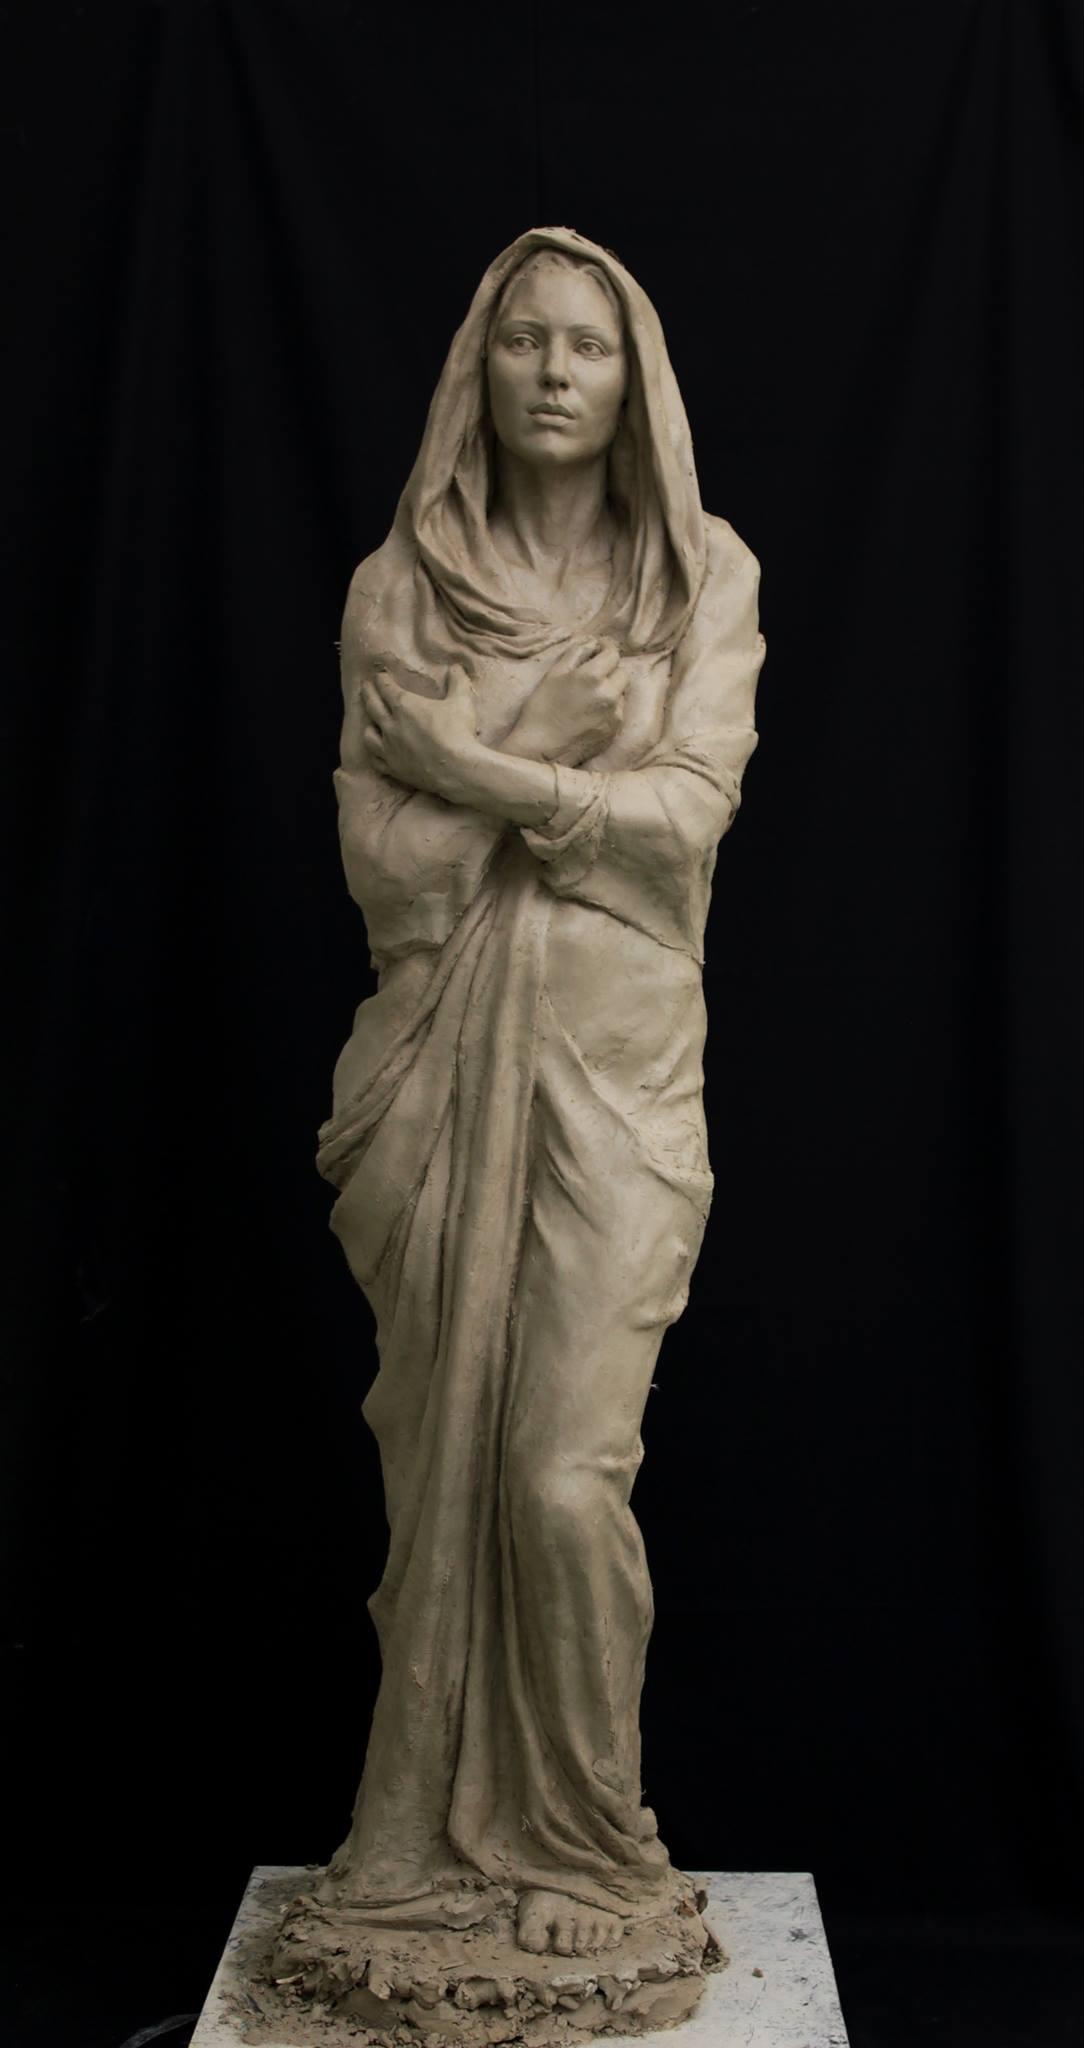 “Lady Madonna” by sculptor and New Masters Academy instructor Johanna Schwaiger. (Courtesy of Johanna Schwaiger)